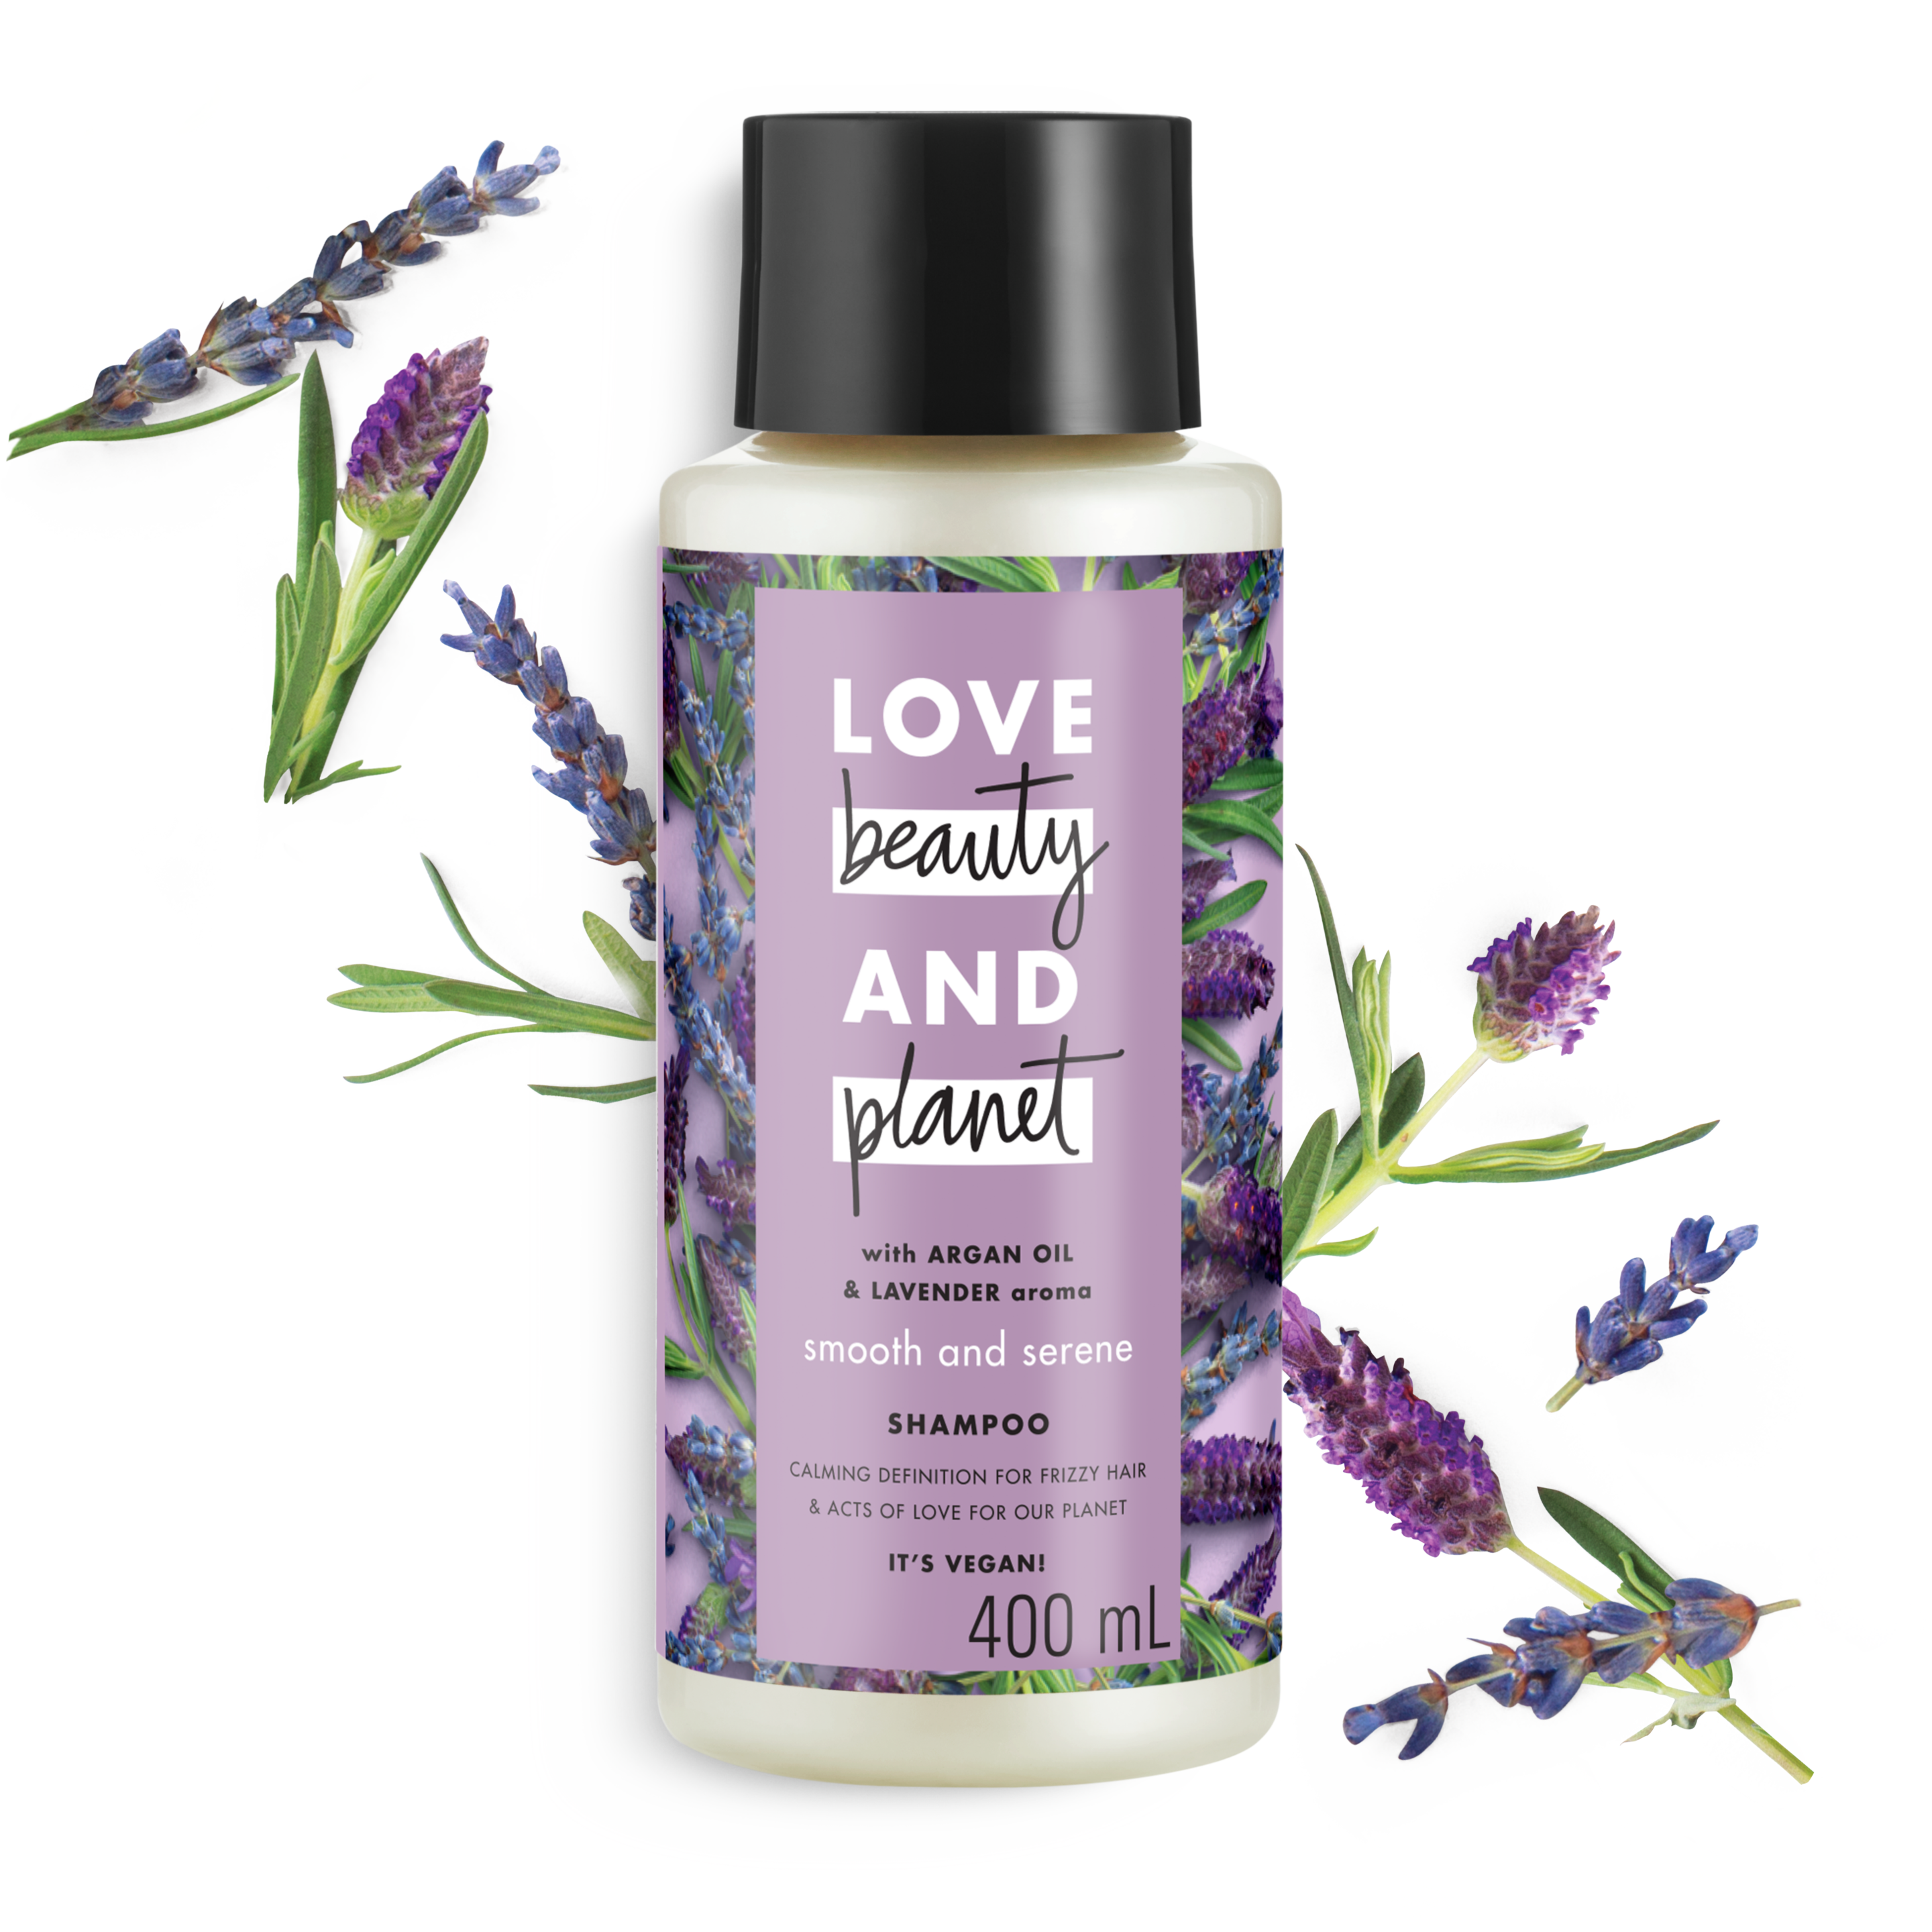 Tampak depan kemasan Love Beauty and Planet Argan Oil & Lavender Shampoo ukuran 400 ml